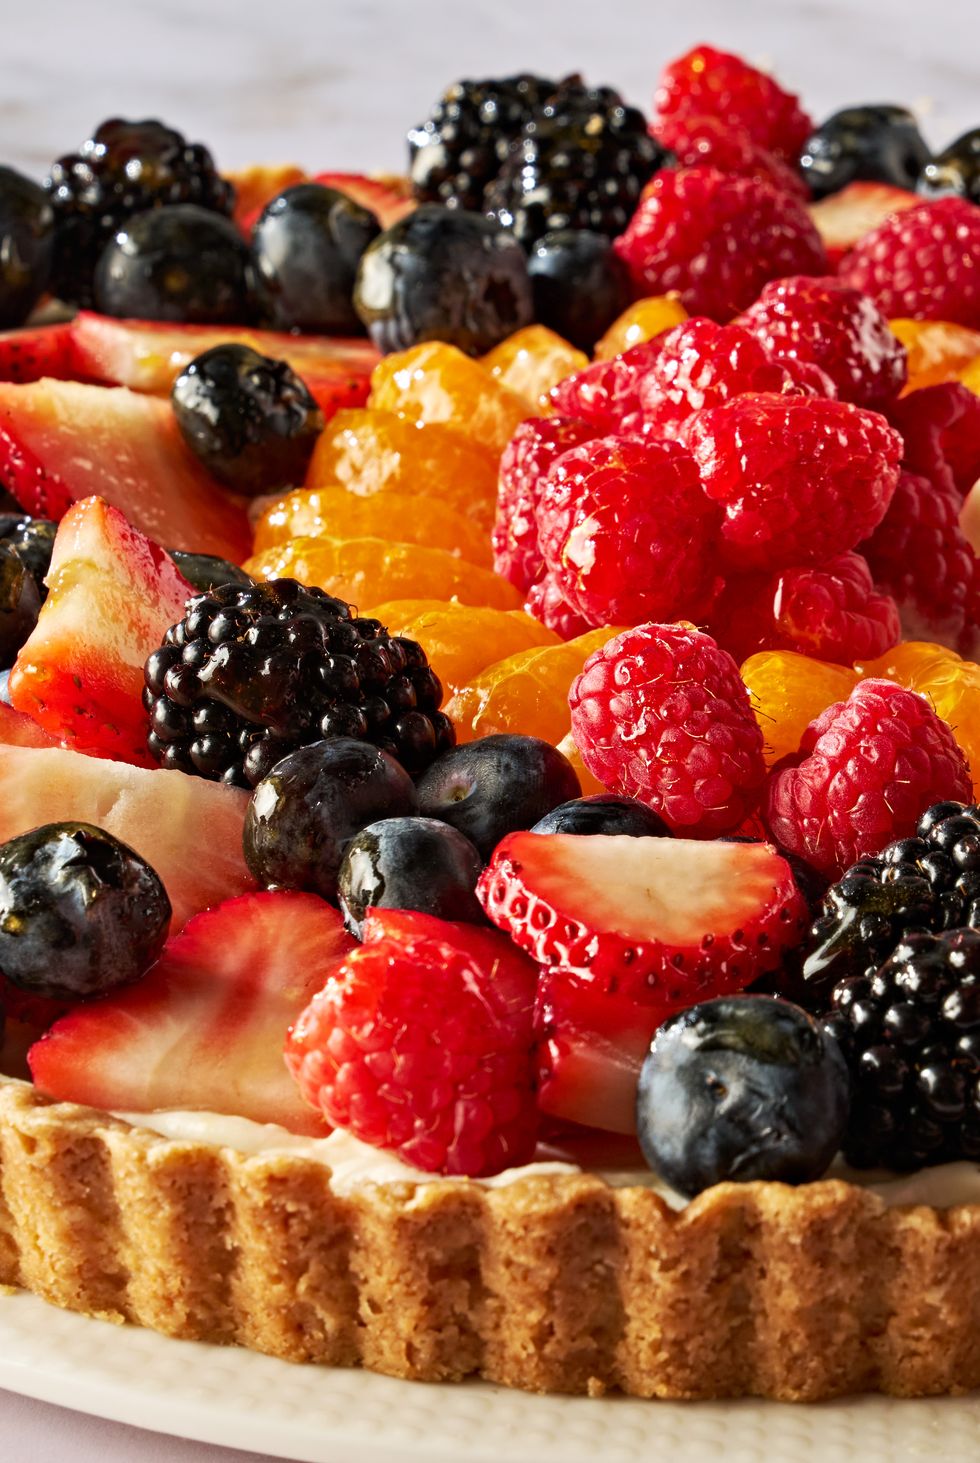 tart topped with blueberries, raspberries, sliced strawberries, blackberries, and orange slices